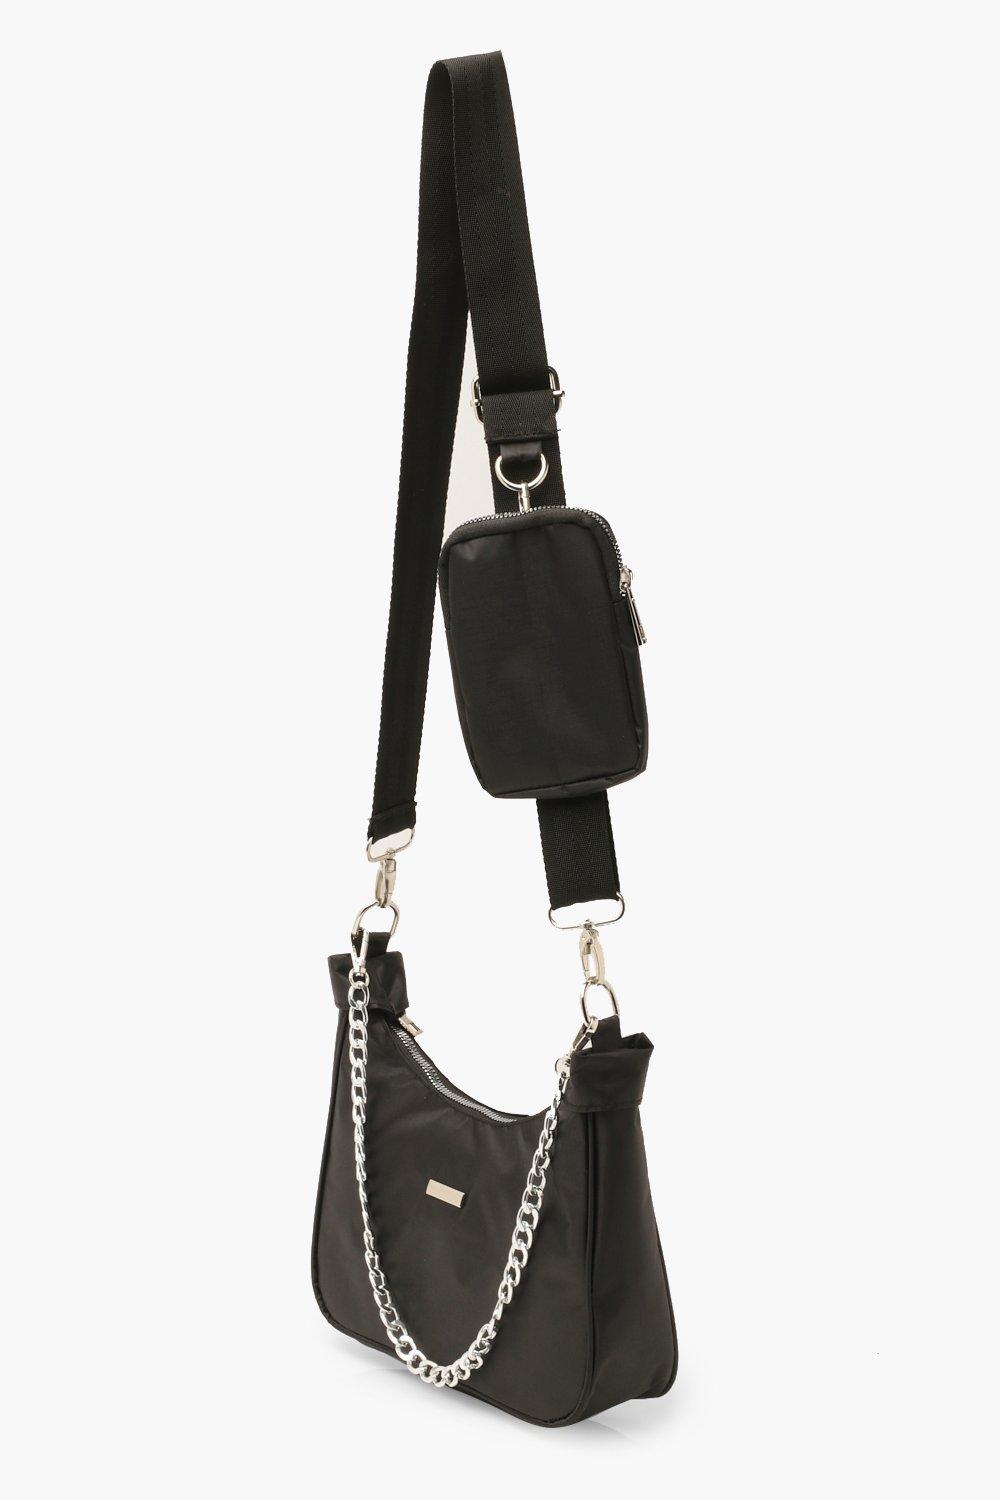 chanel handbag black friday sale